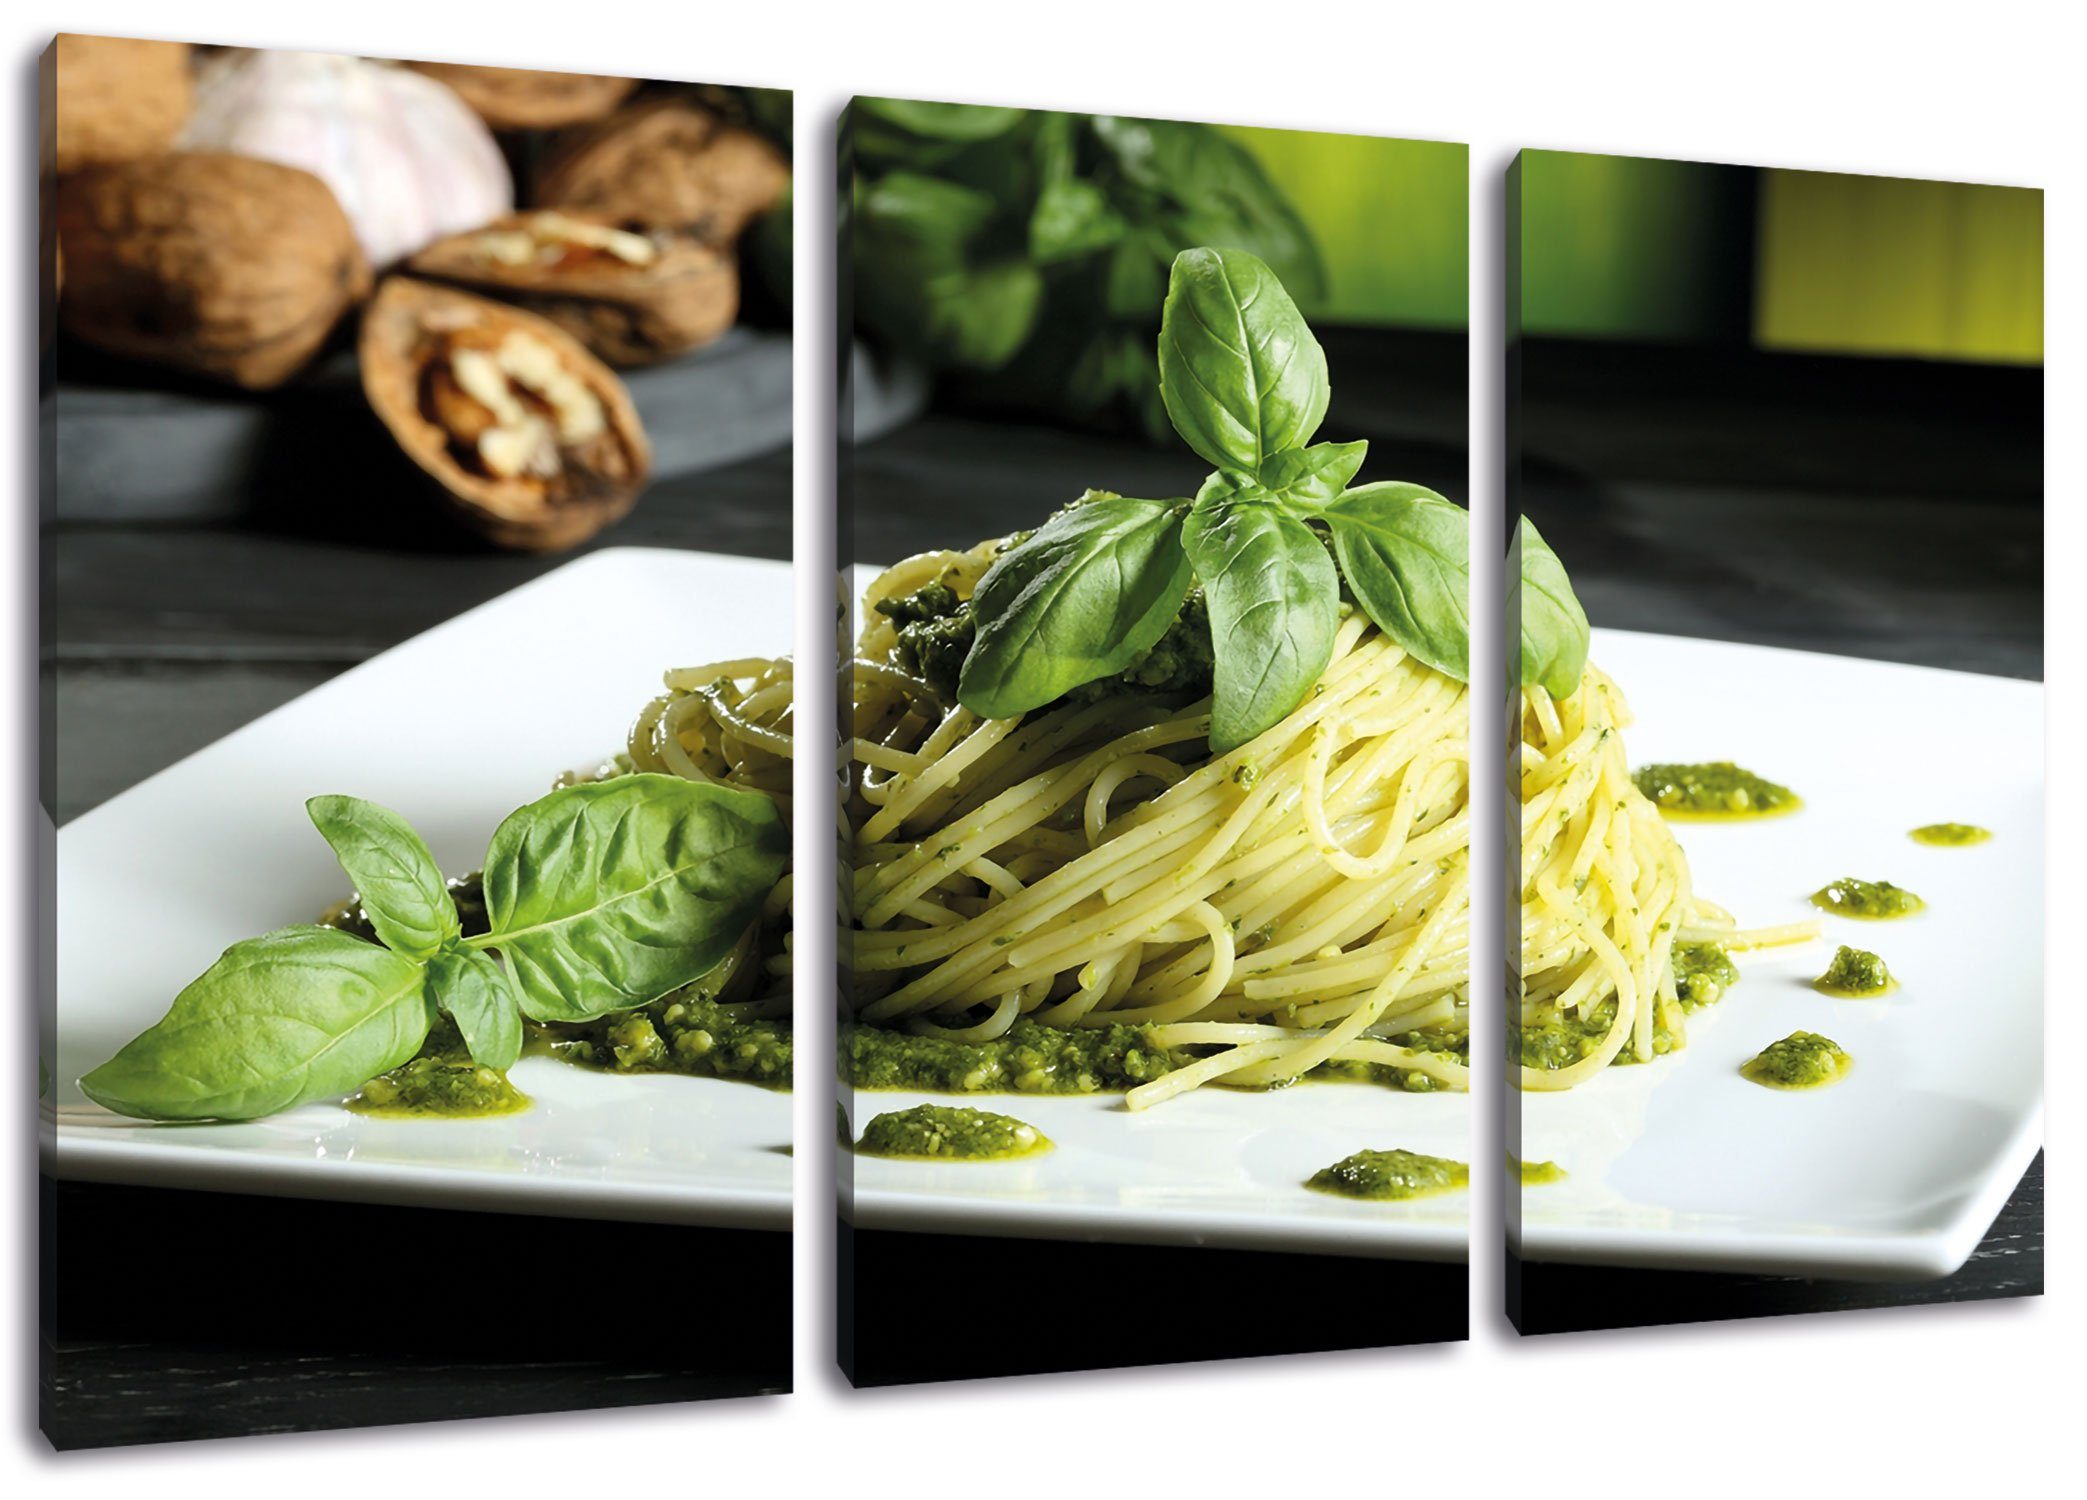 Pixxprint Leinwandbild Spaghetti mit grünem (120x80cm) grünem Leinwandbild mit Pesto, Spaghetti Pesto St), fertig (1 Zackenaufhänger inkl. bespannt, 3Teiler